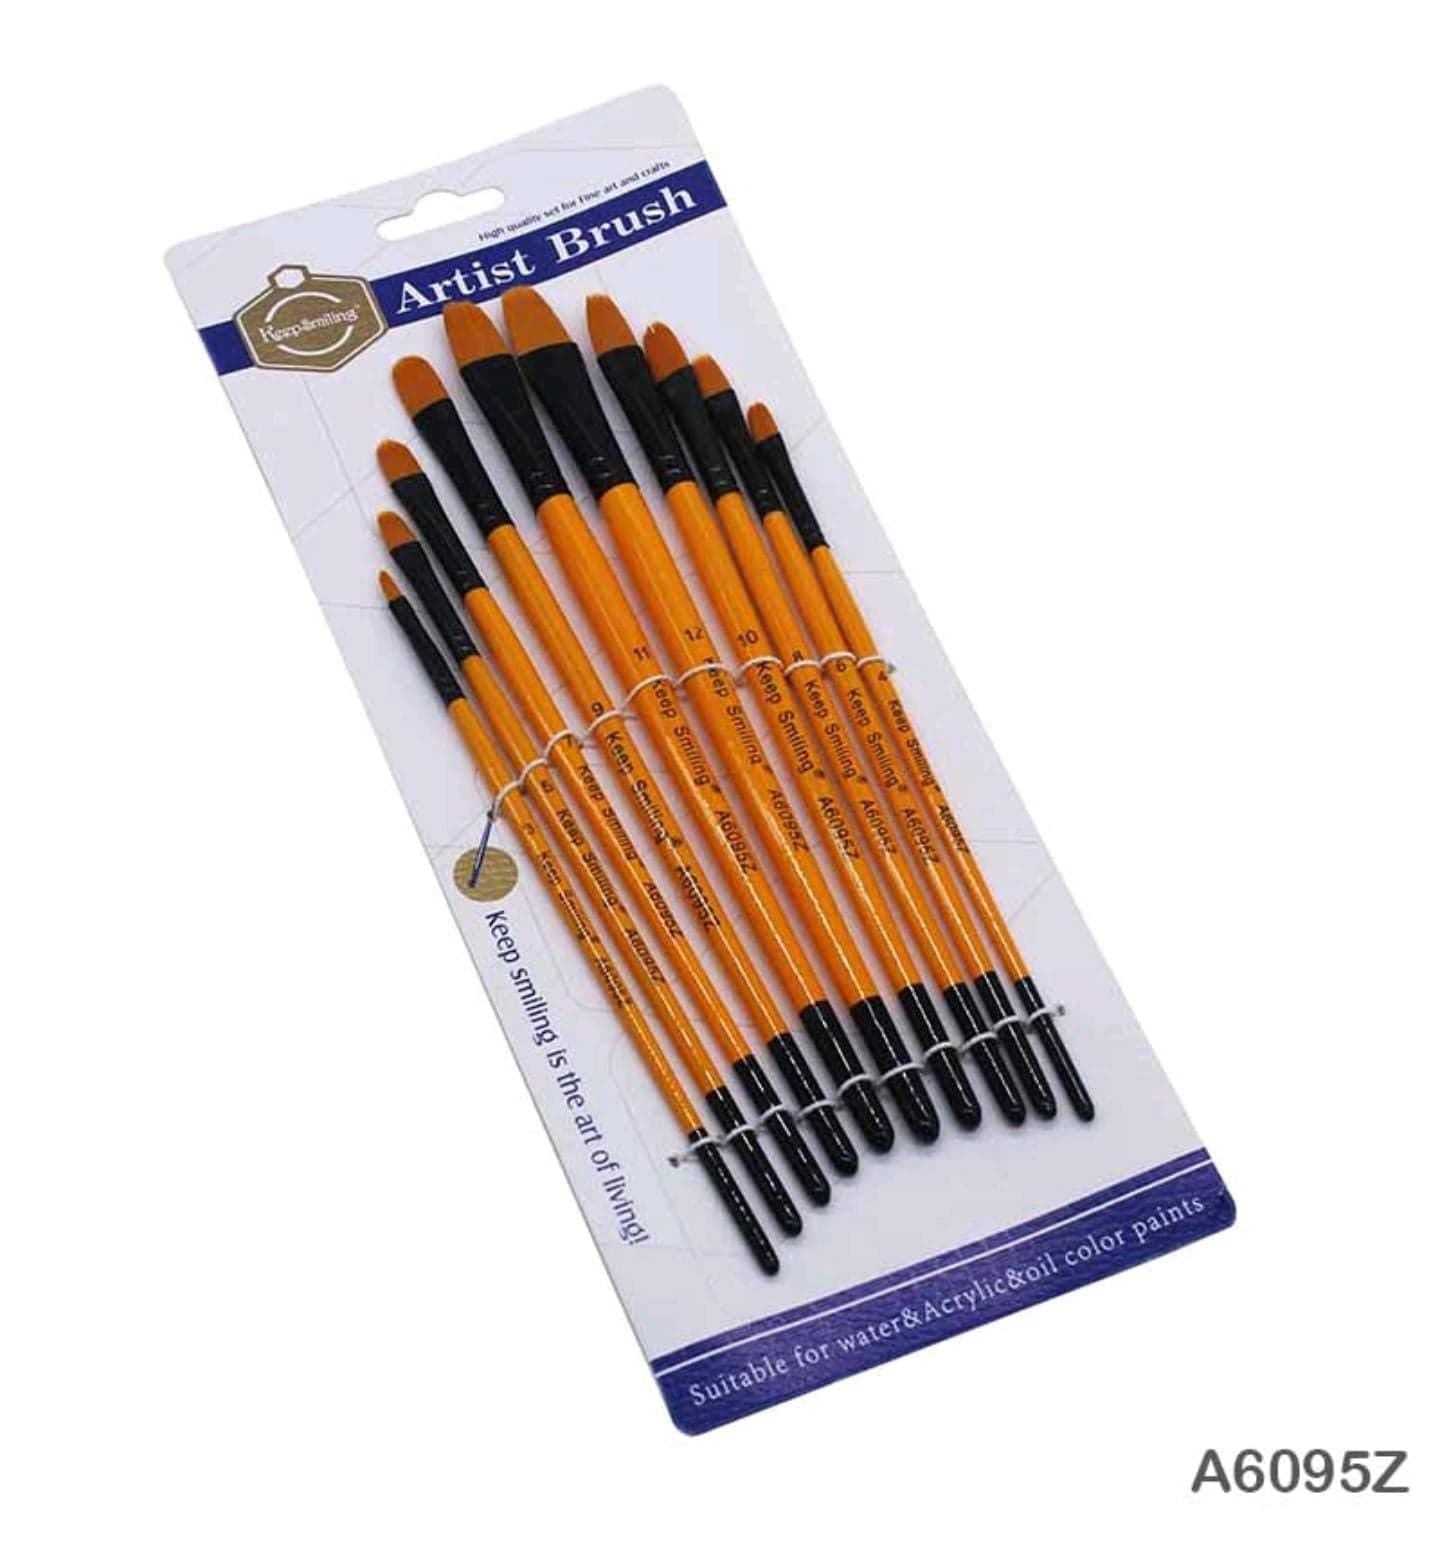 Craftdev Easel & Art Tools-brushes Premium Orange handle soft brush set for artist (10 brushes)